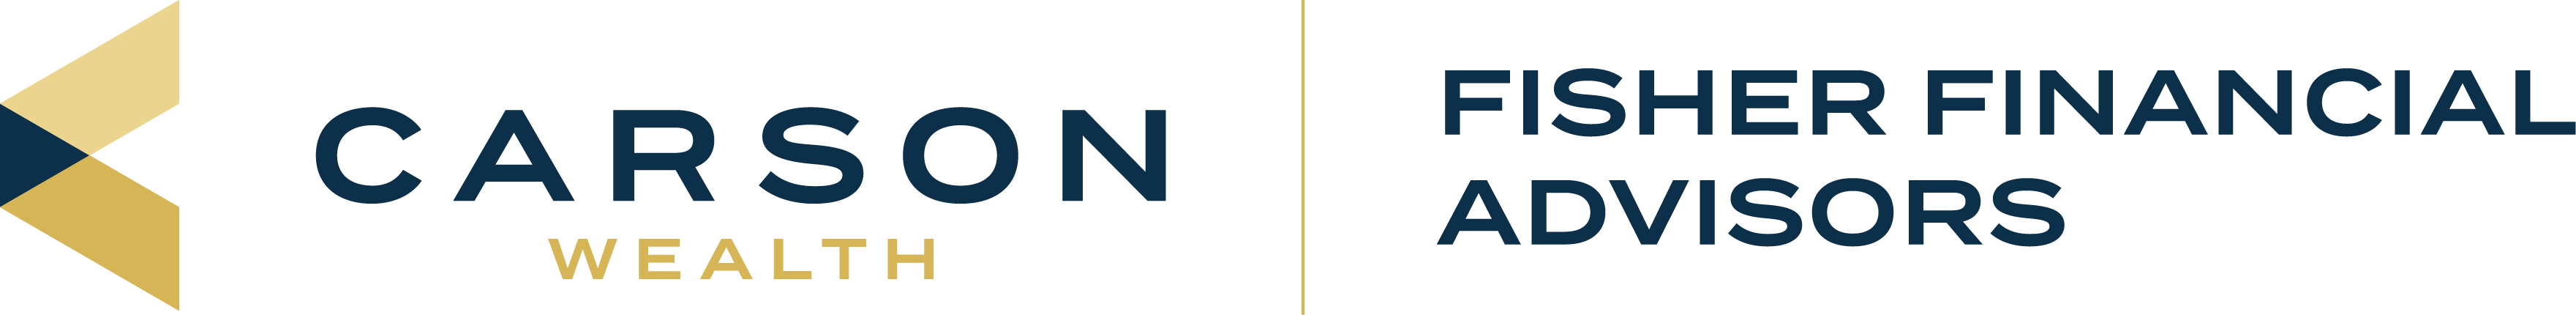 Carson Wealth | Fisher Financial Advisors logo